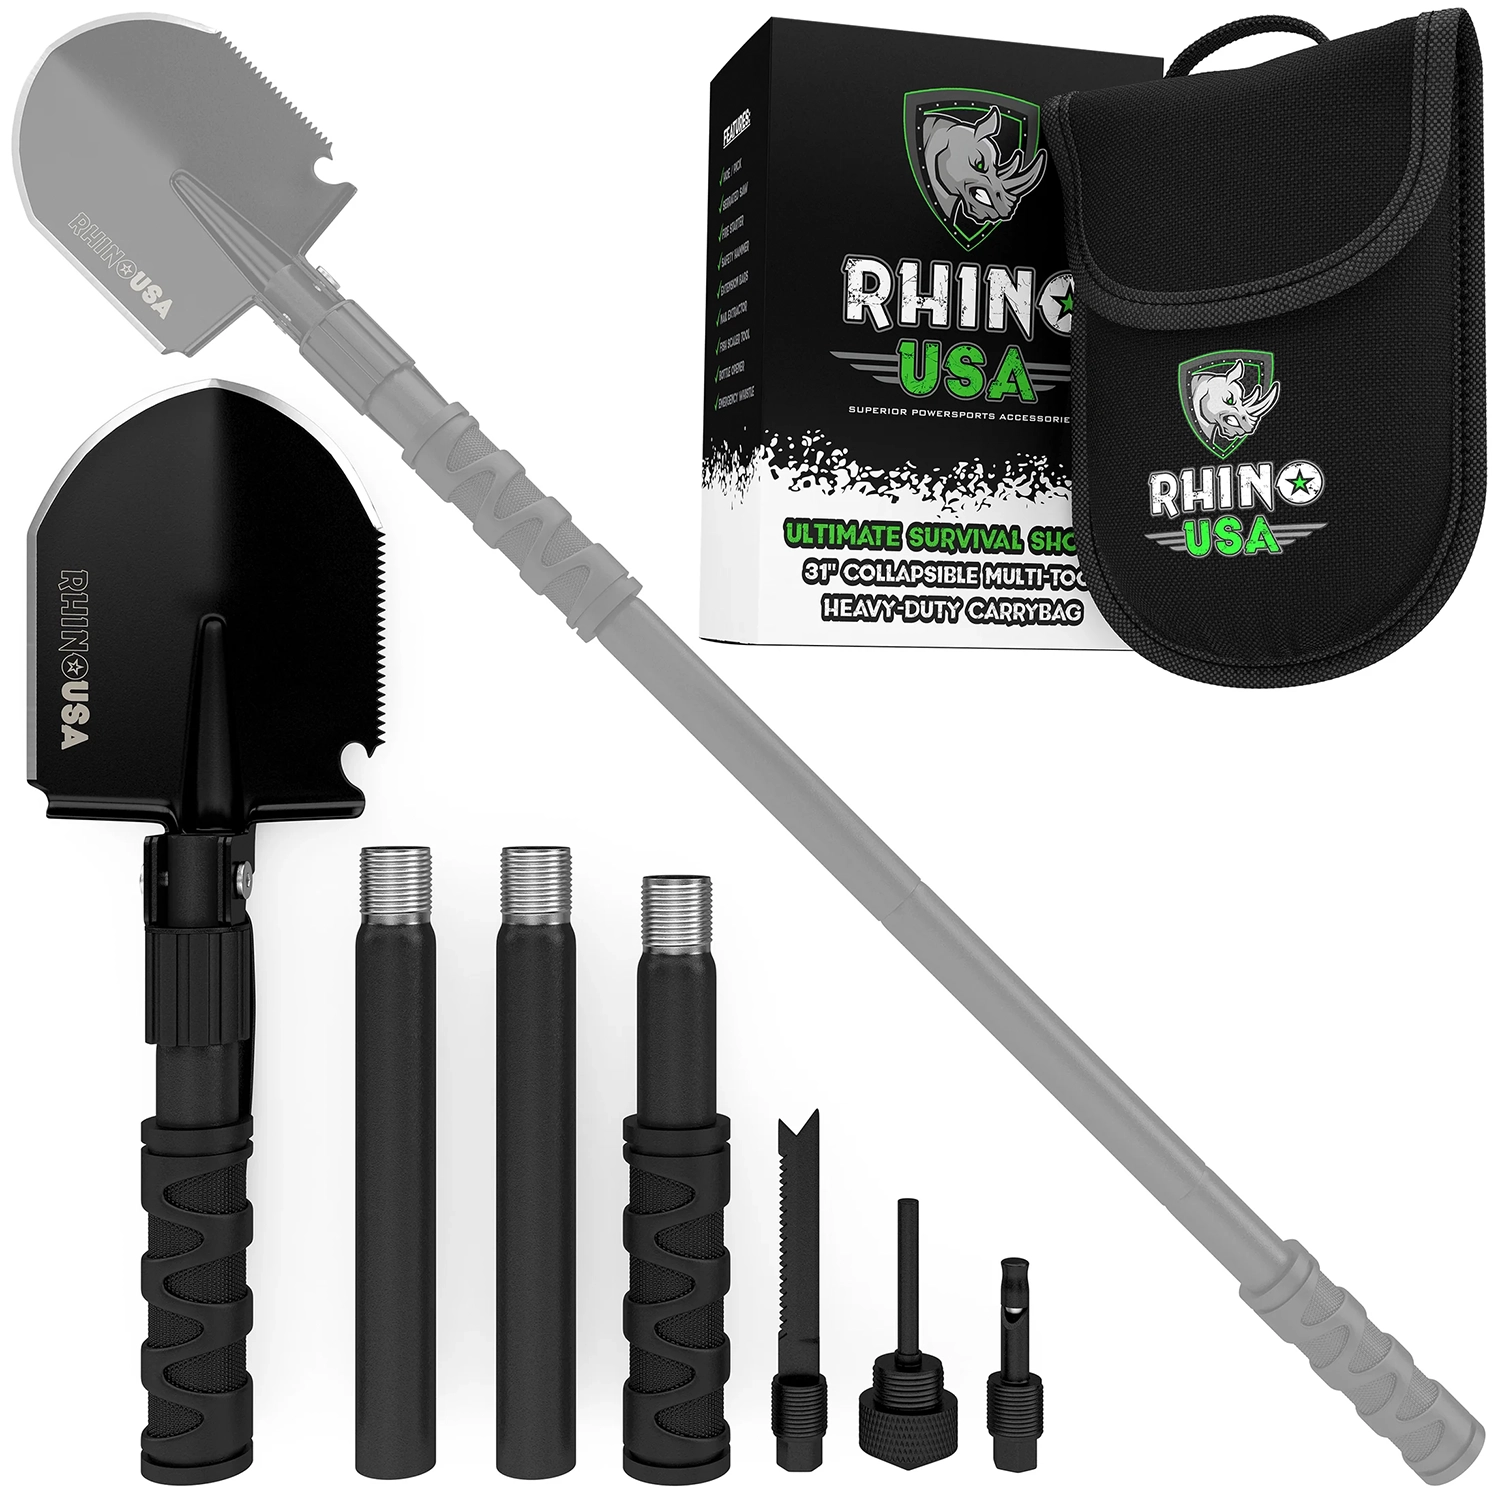 rhino usa ultimate survival shovel 9